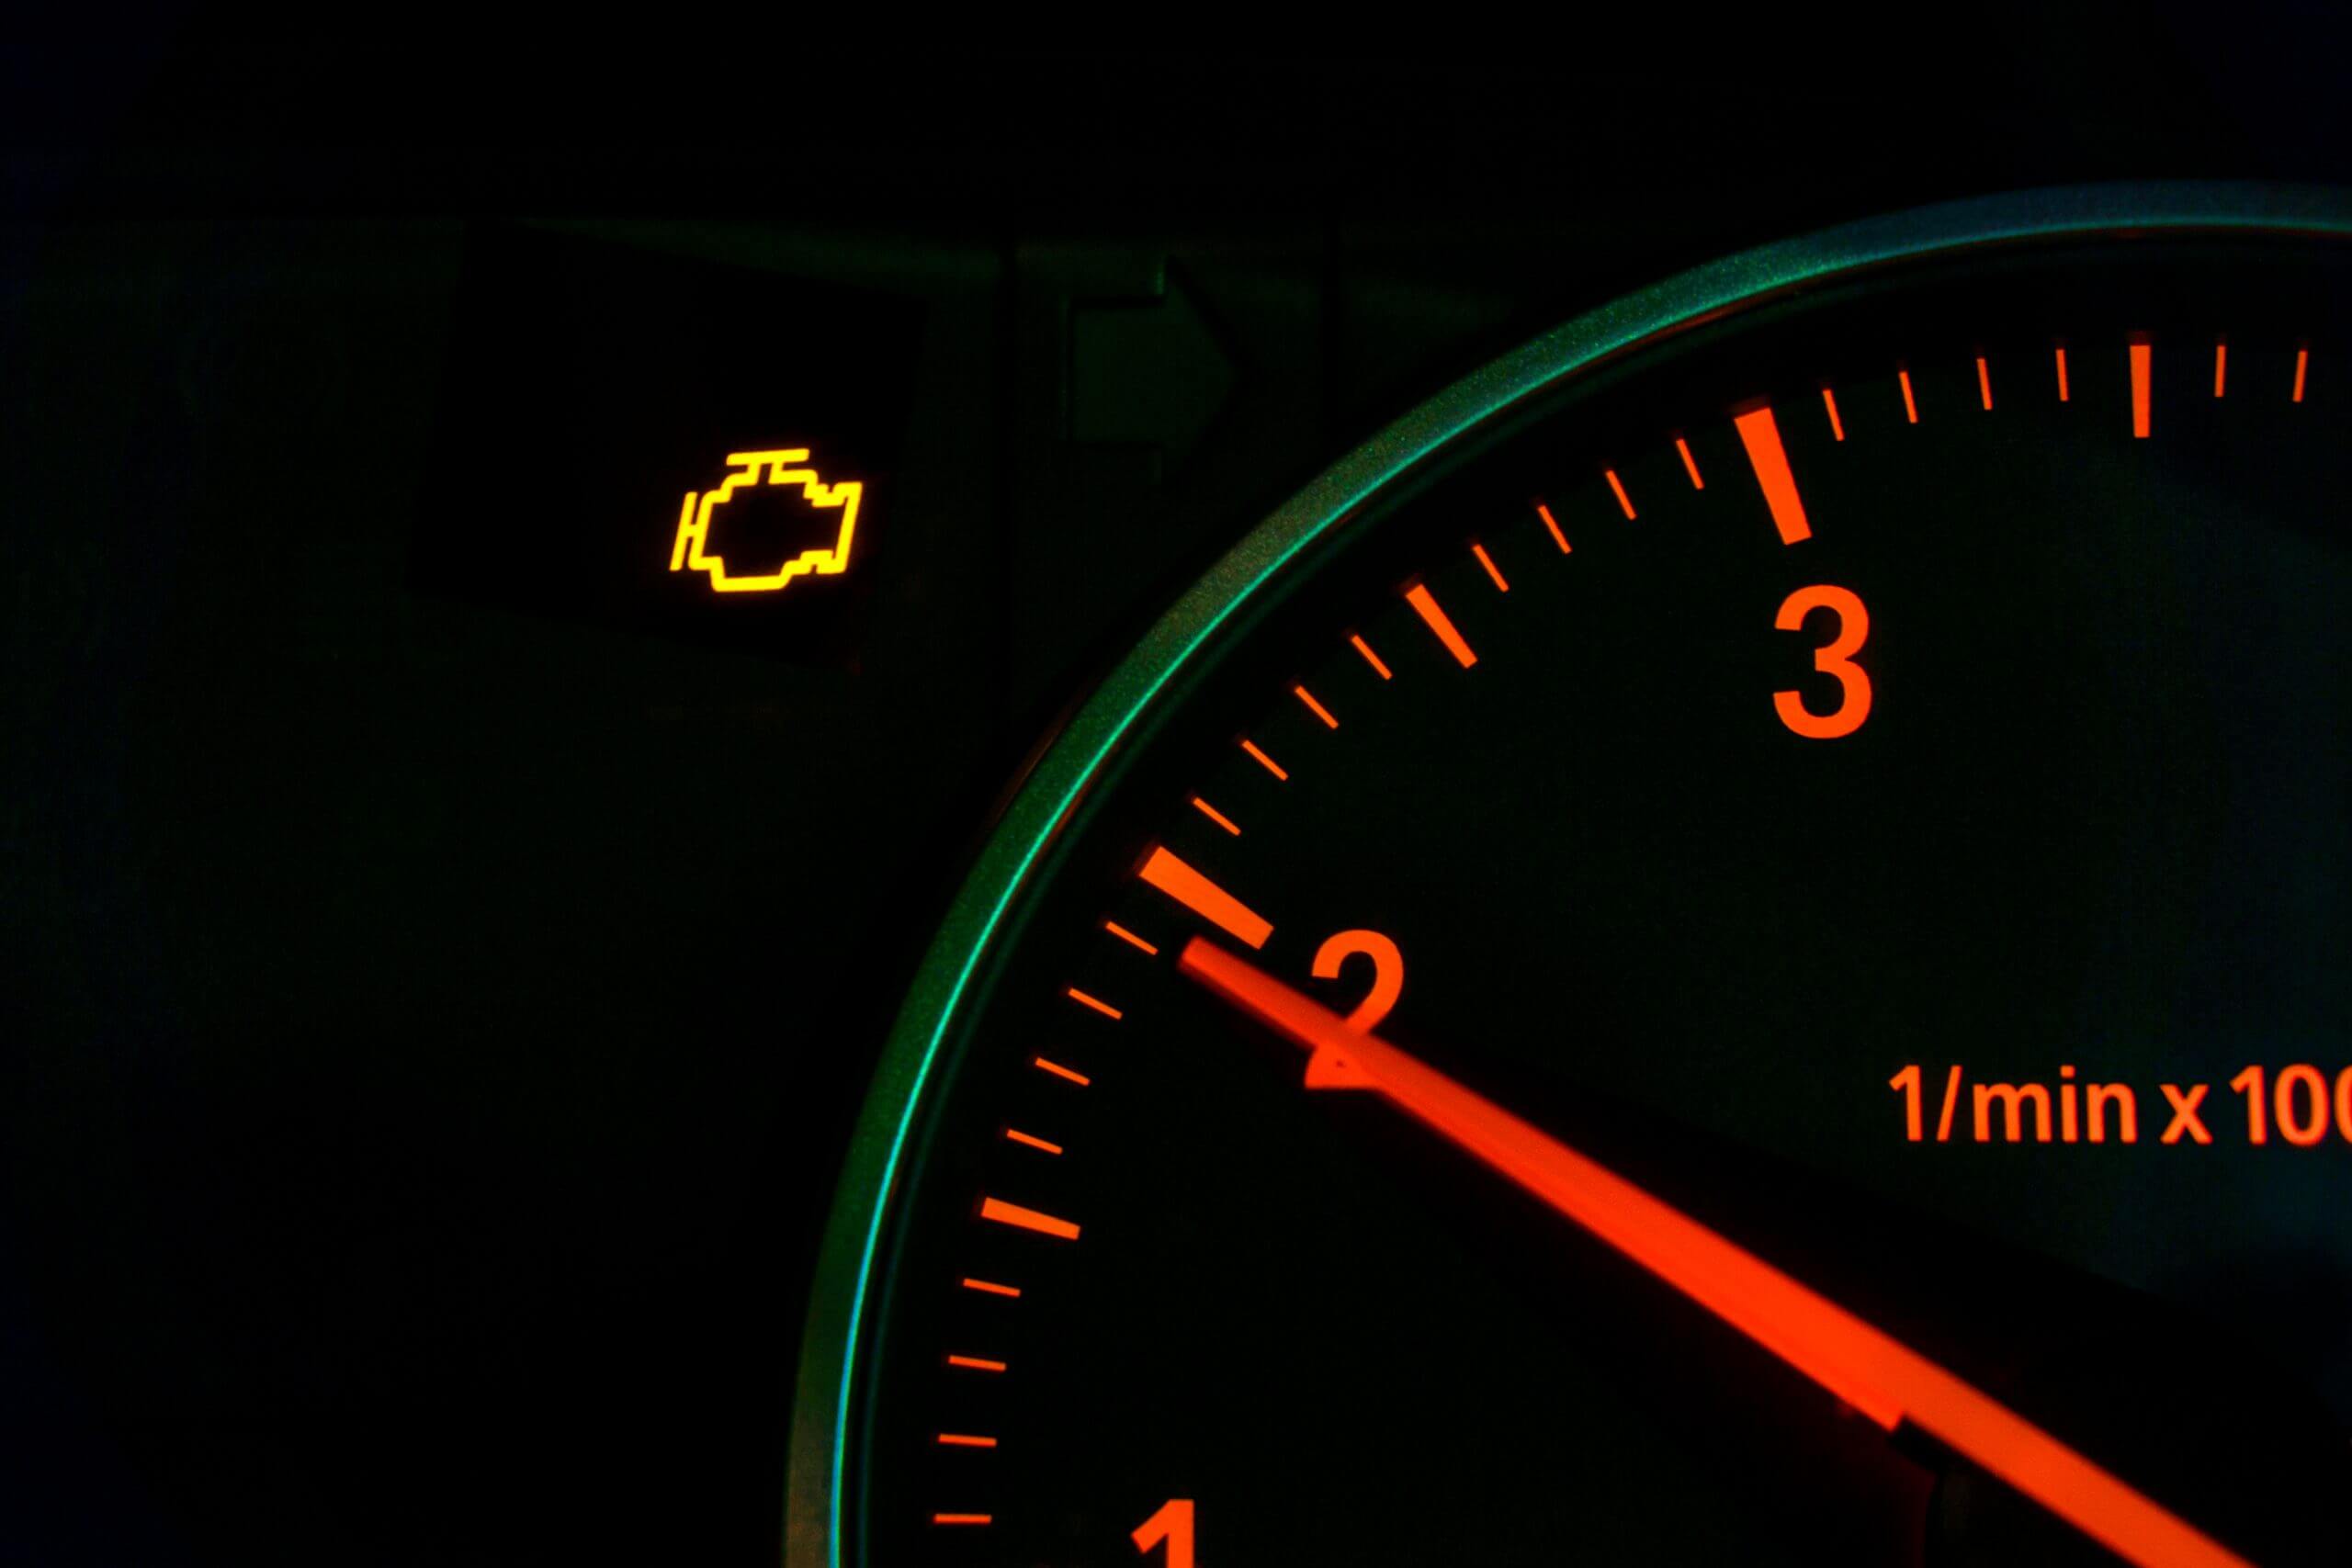 Engine malfunction warning light control in car dashboard.